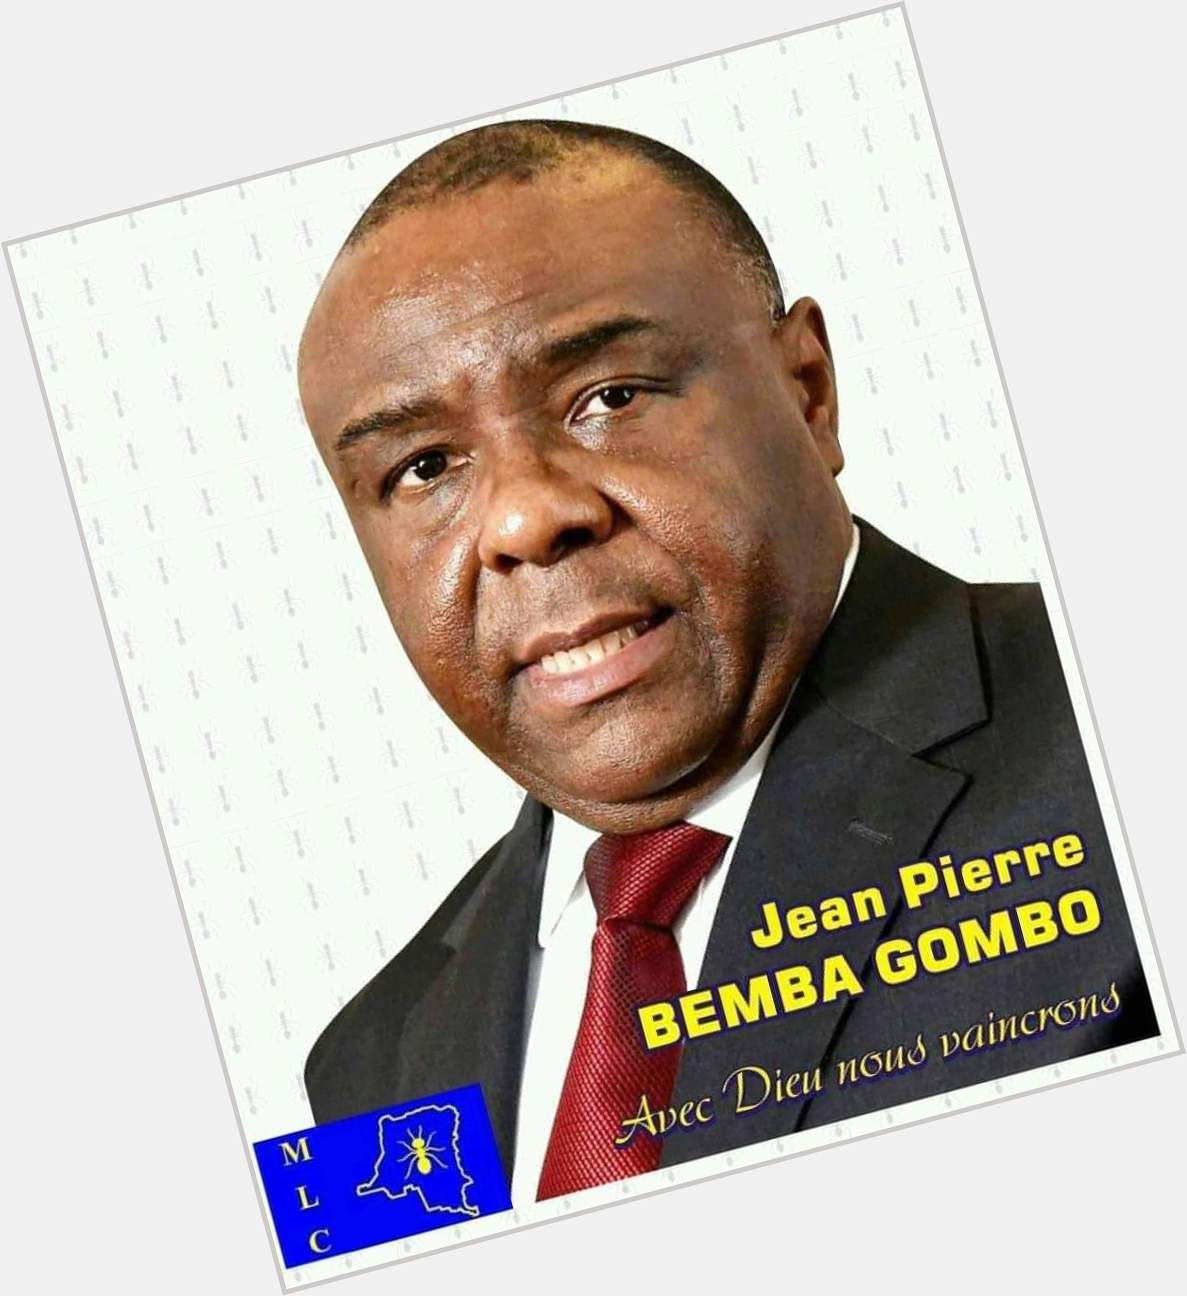   News

~Happy birthday au chairman Jean Pierre Bemba le président du MLC. 